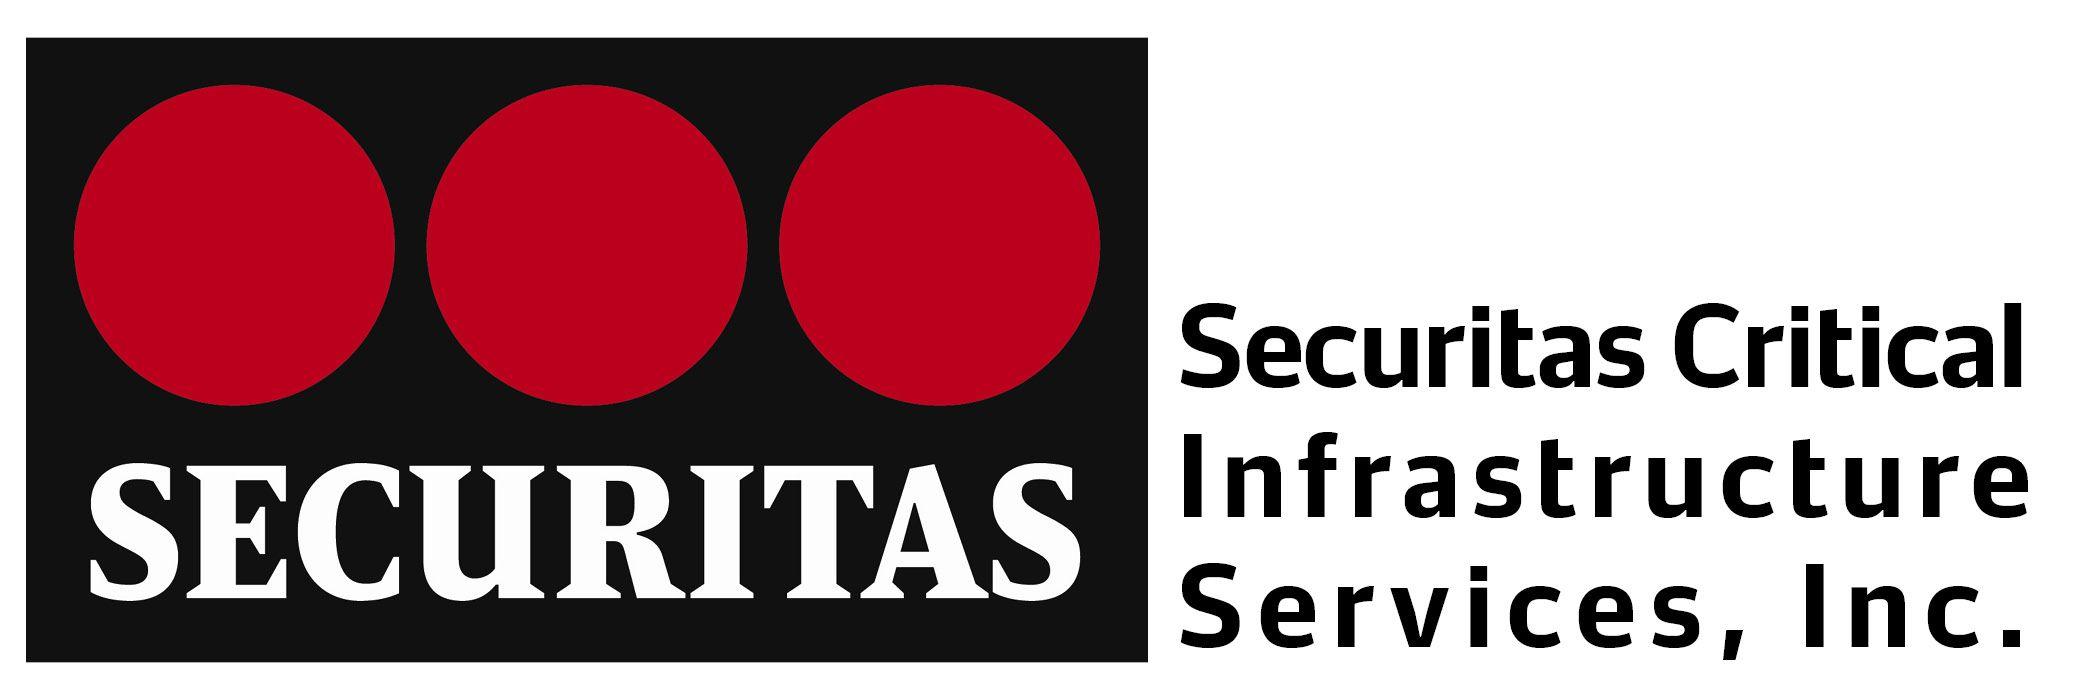 Securitas Logo - Security Officer